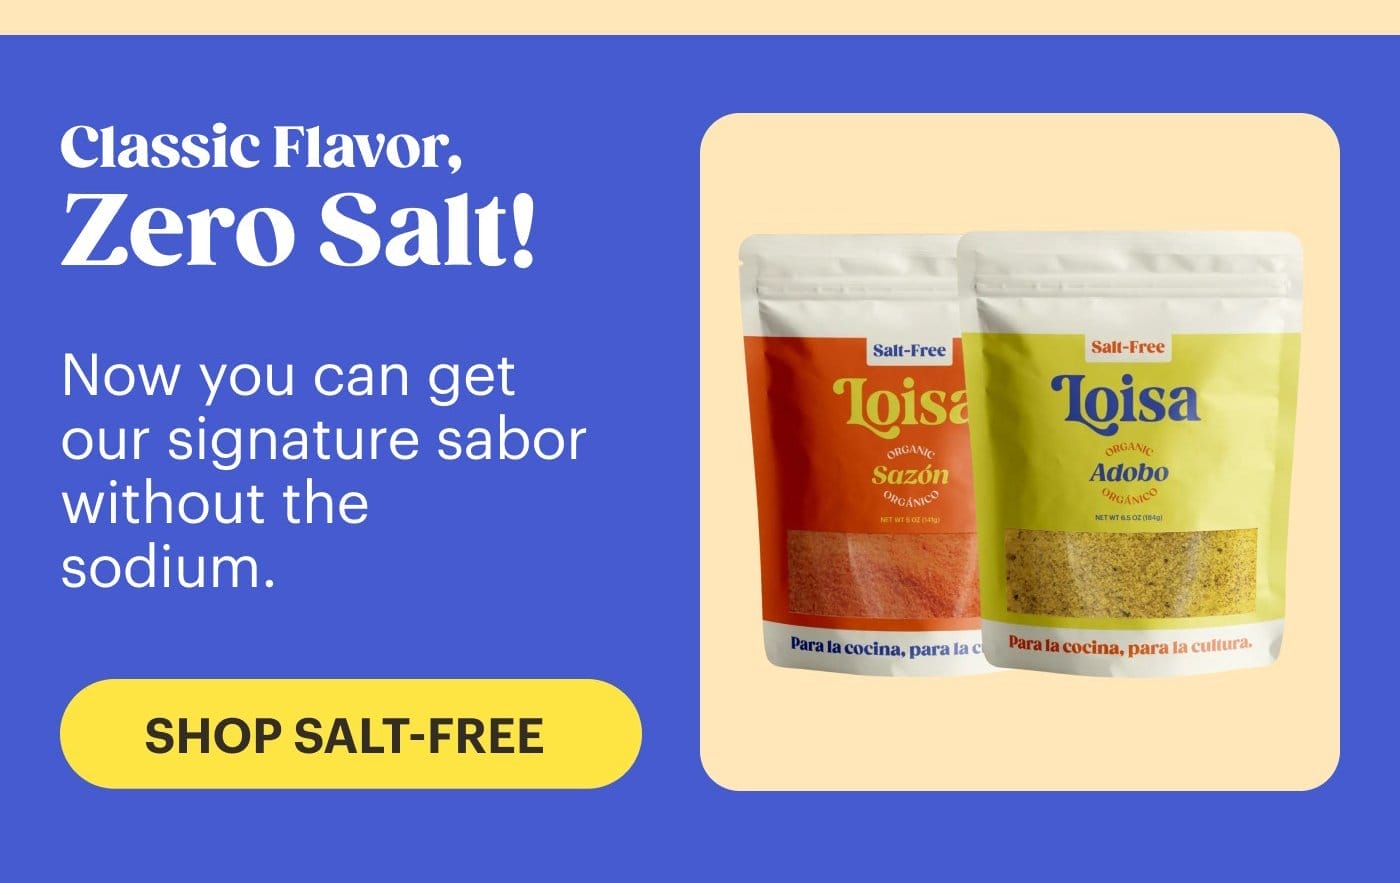 Classic Flavor, Zero Salt! HOP SALT-FREE